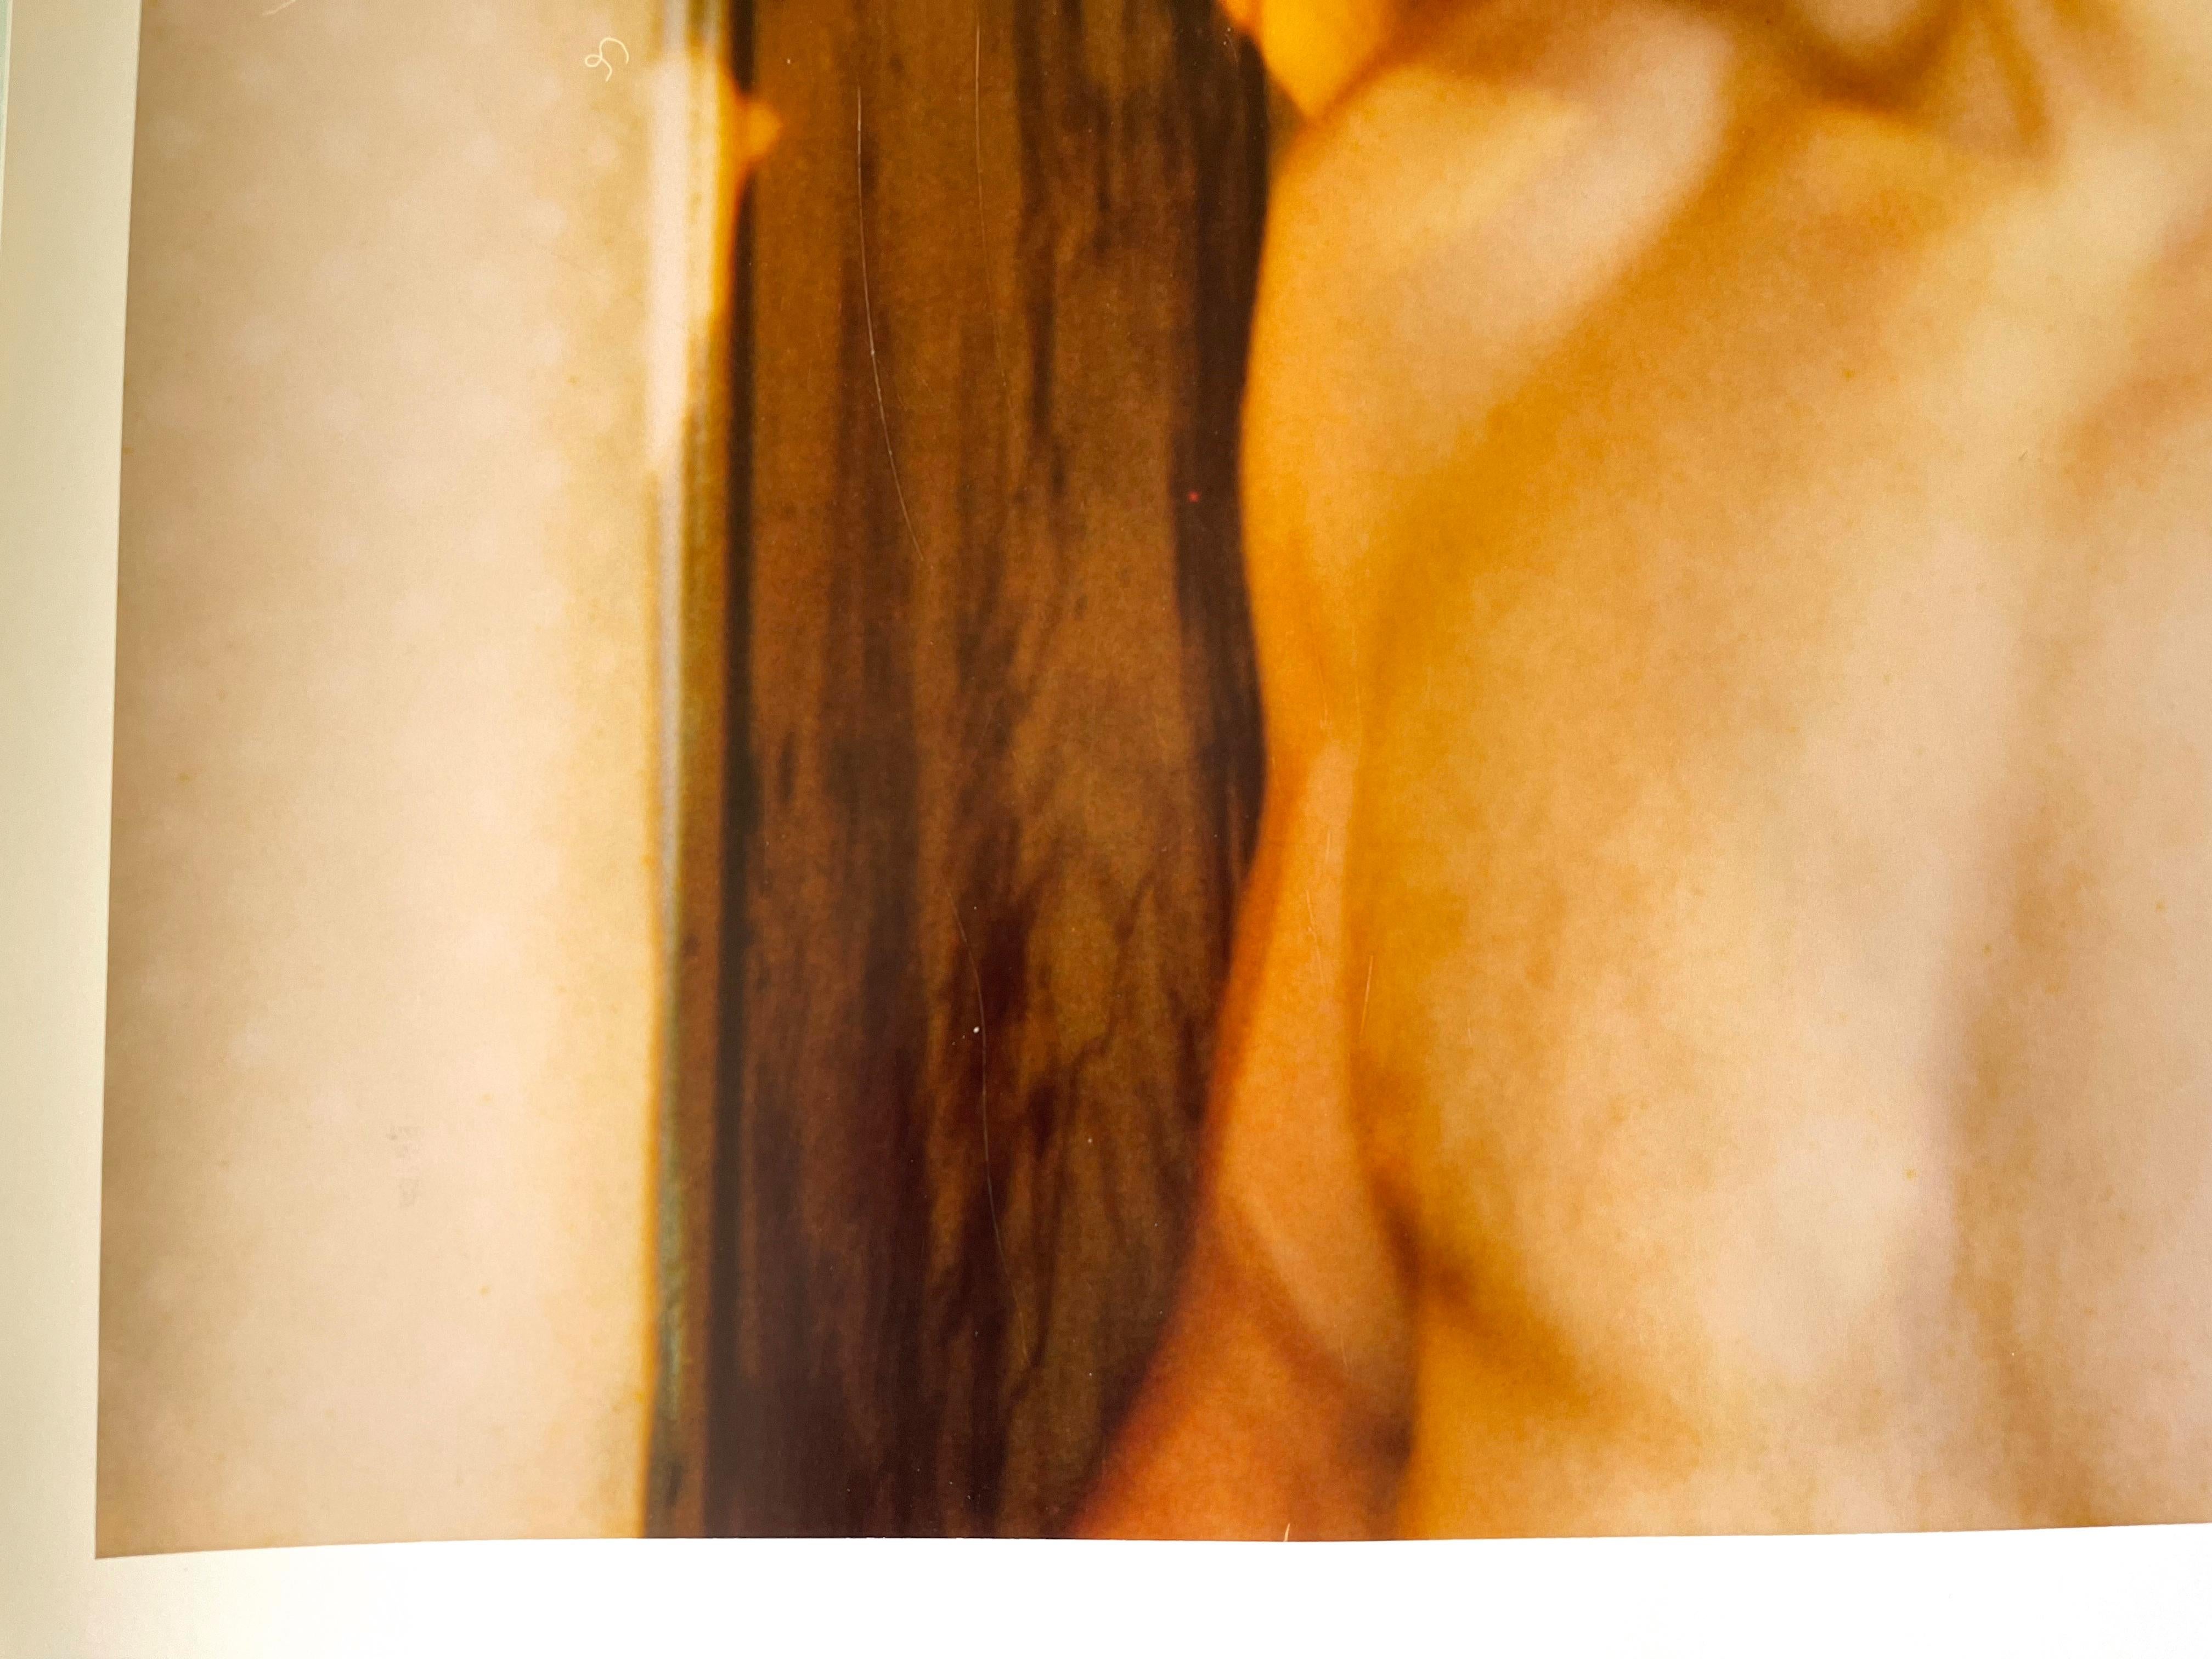 Male Nude (29 Palms, CA) - 58x56cm, analog, Polaroid, Contemporary, 20th Century - Orange Color Photograph by Stefanie Schneider